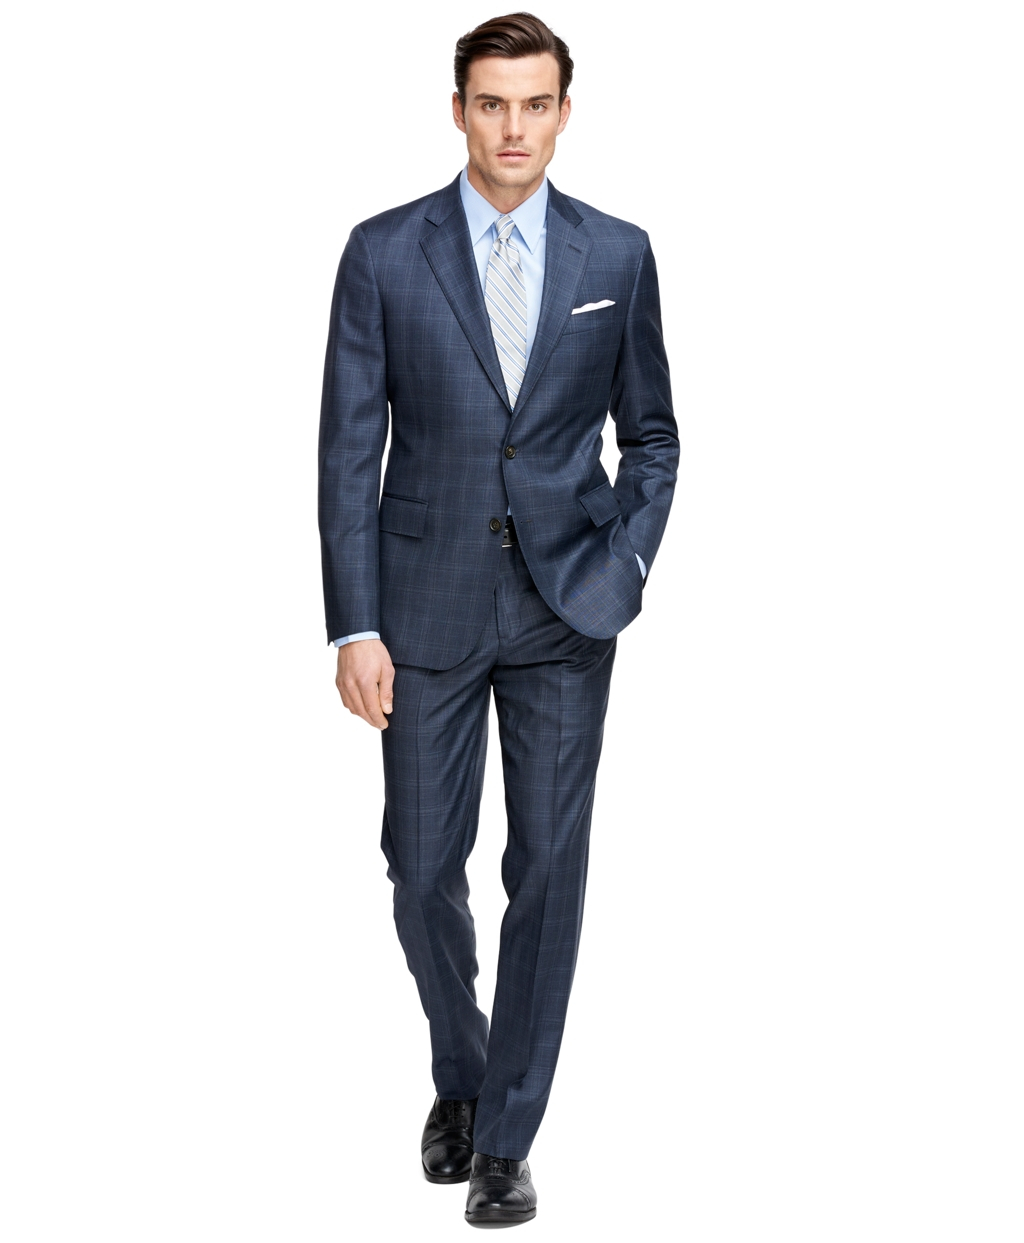 Lyst - Brooks Brothers Regent Fit Saxxon Wool Blue Plaid 1818 Suit in ...